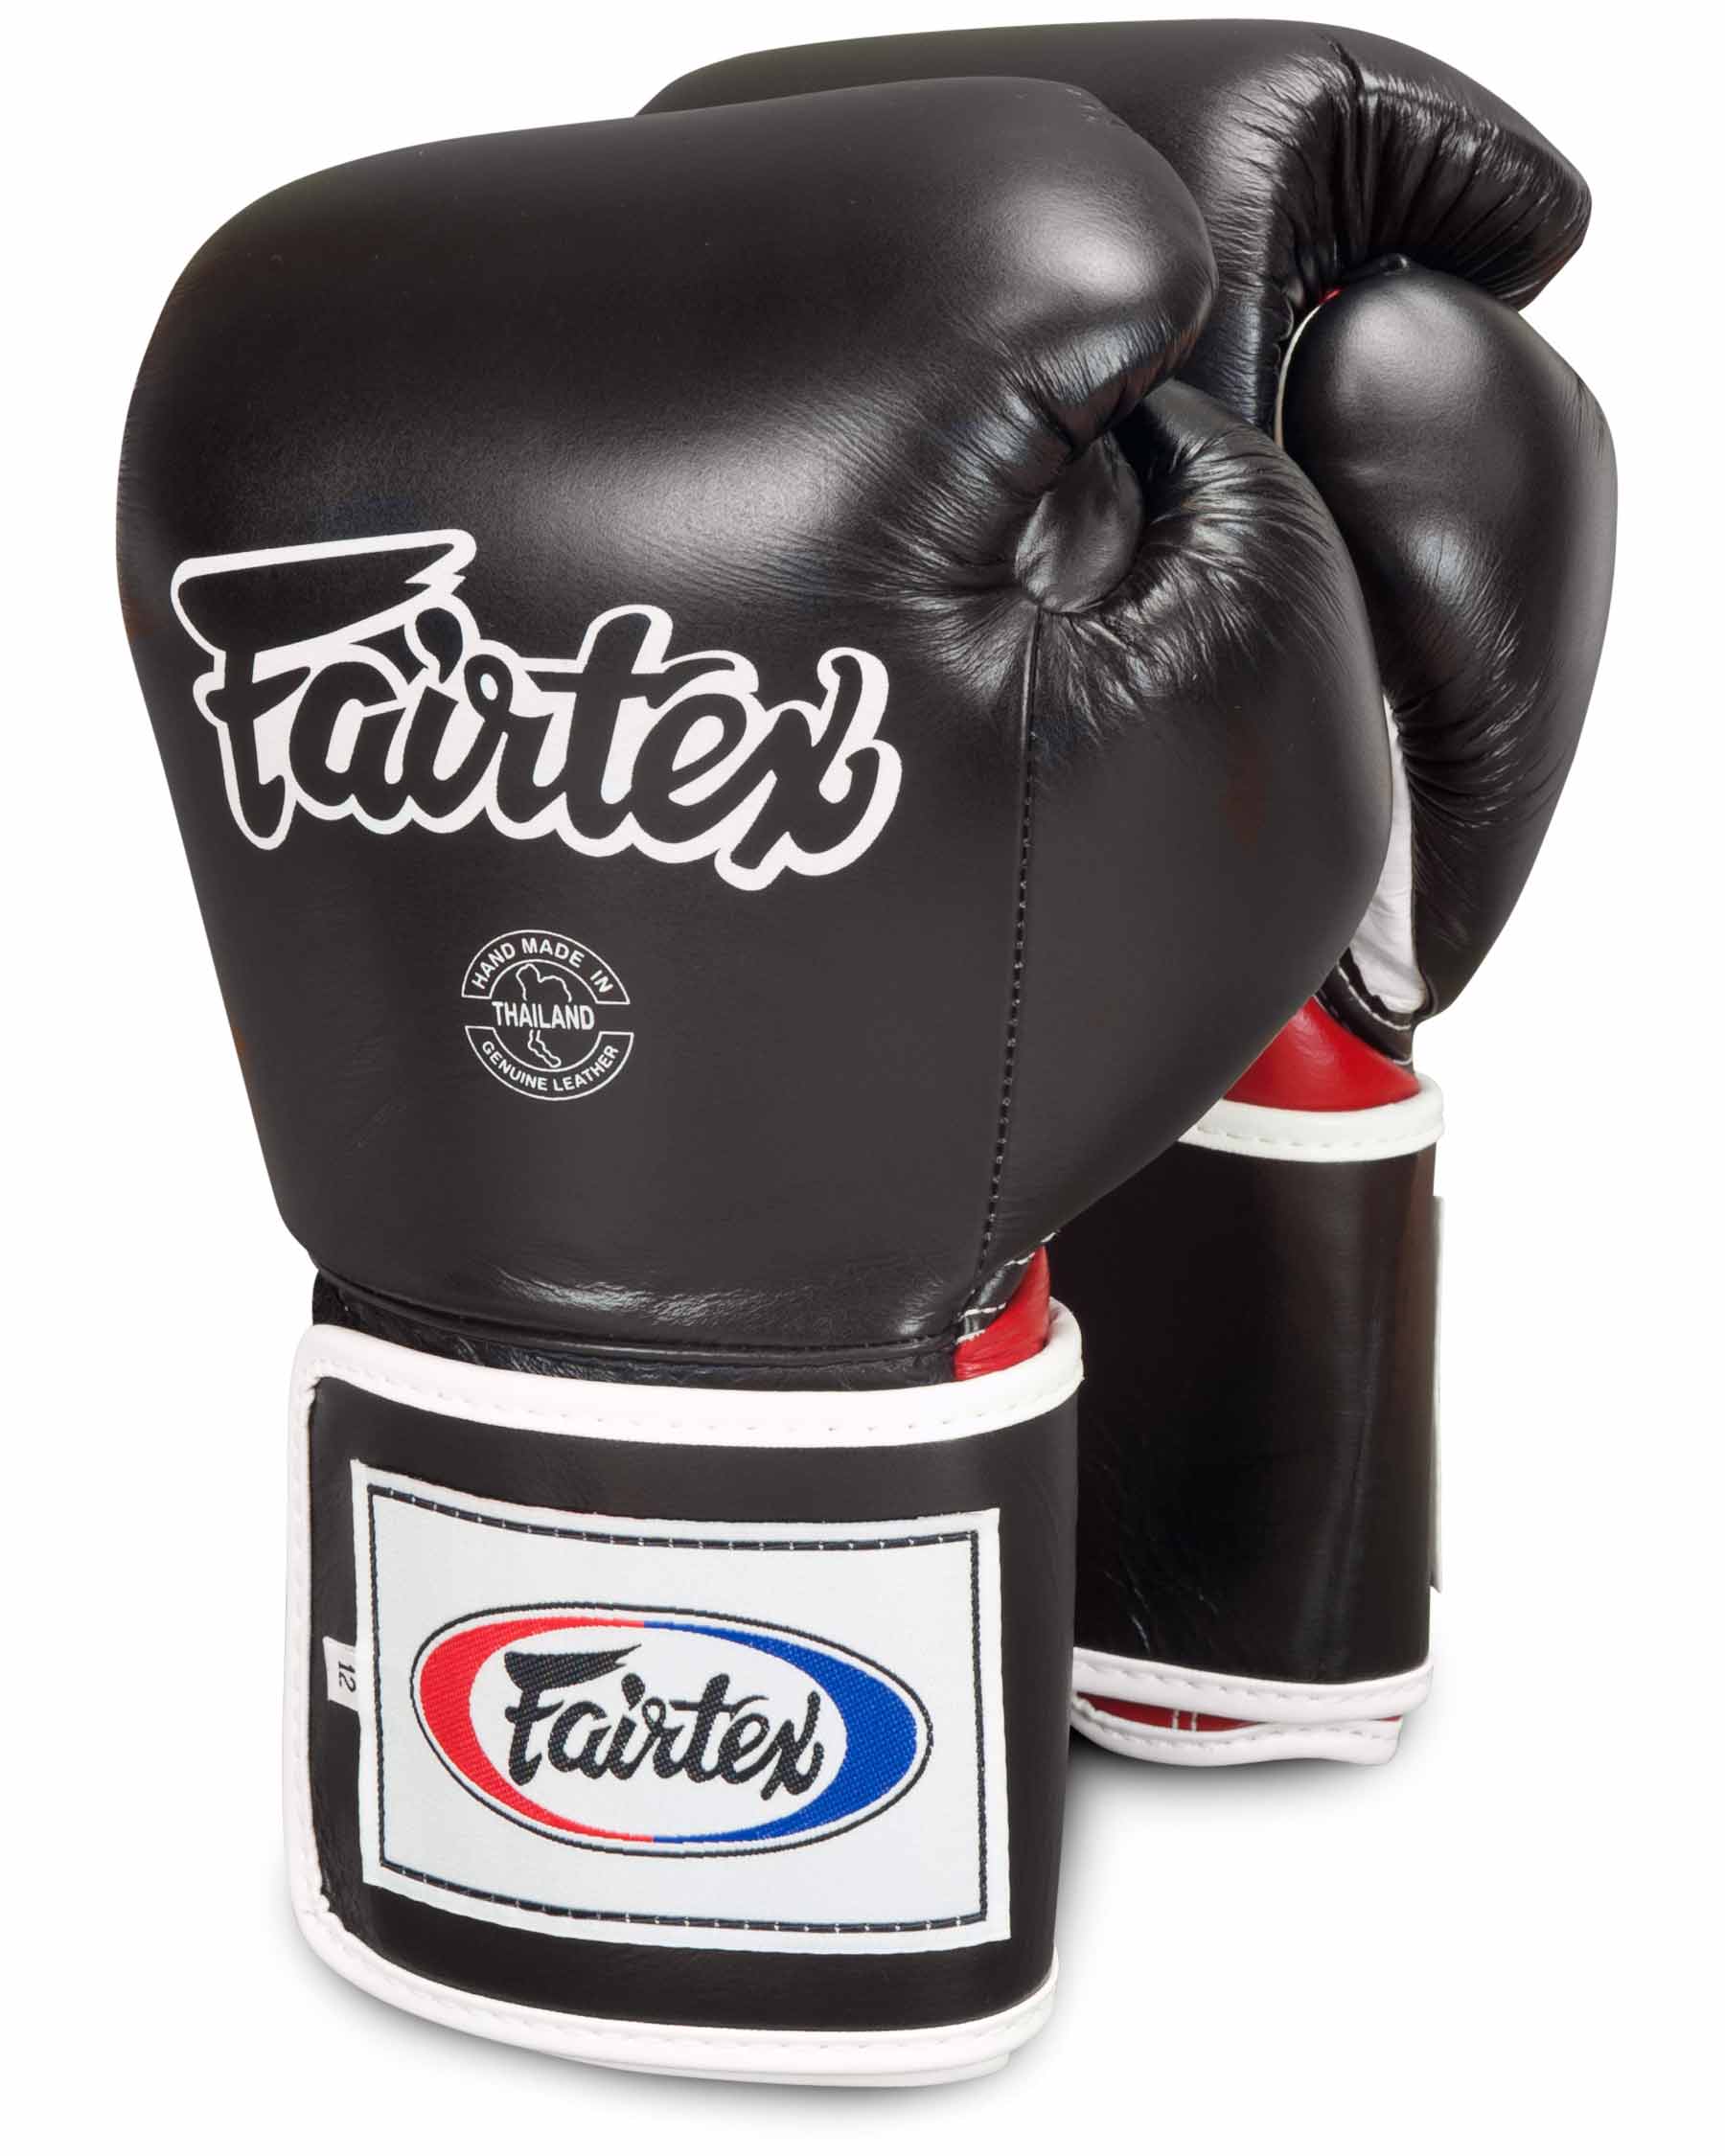 Fairtex Fairtex Leather Training Boxing Gloves Muay Thai Kickboxing Black Red White 12oz 